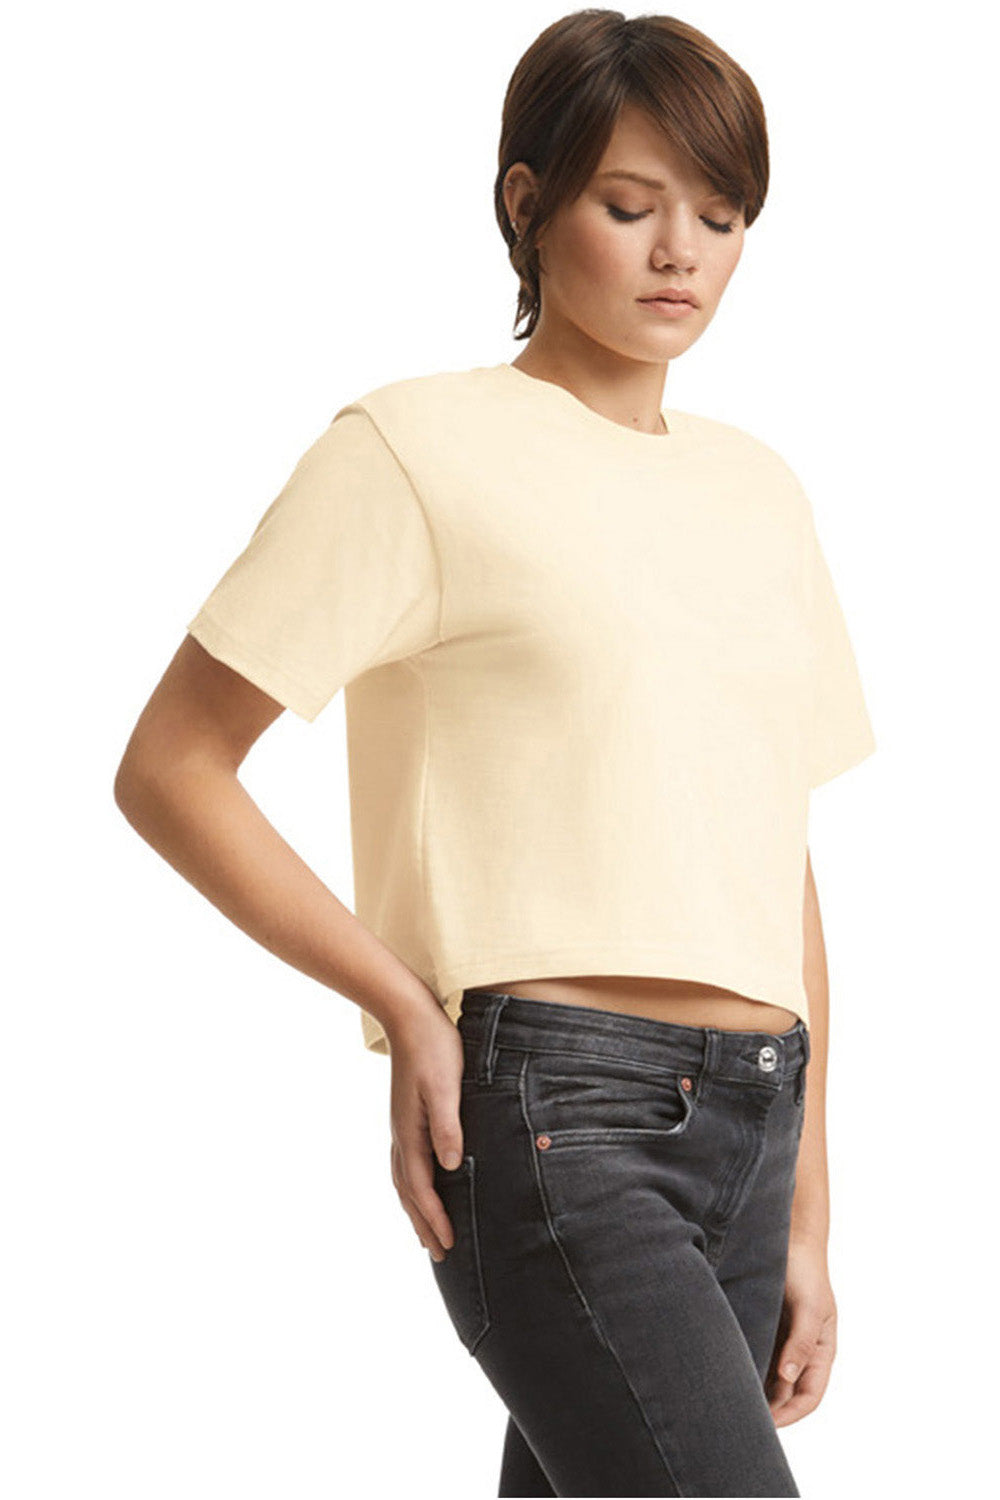 American Apparel 102AM Womens Fine Jersey Boxy Short Sleeve Crewneck T-Shirt Cream Model Side